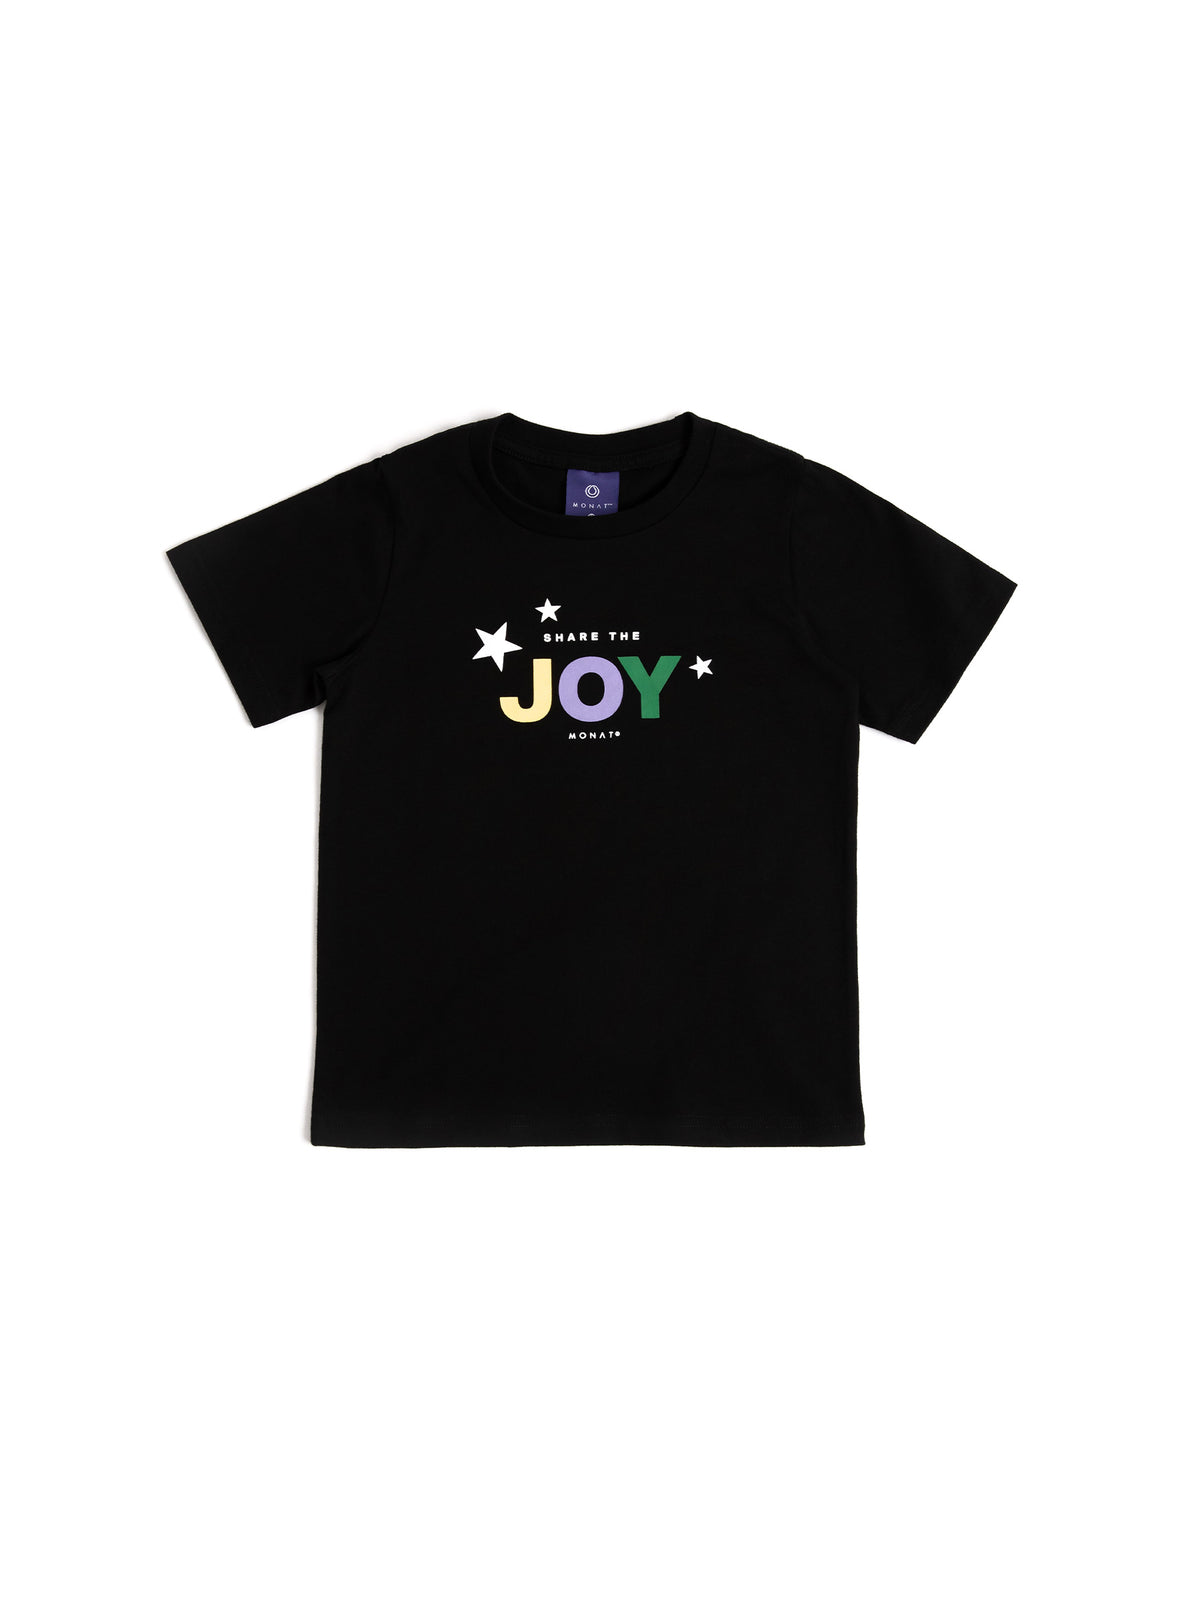 MONAT Share The Joy Tee Shirt